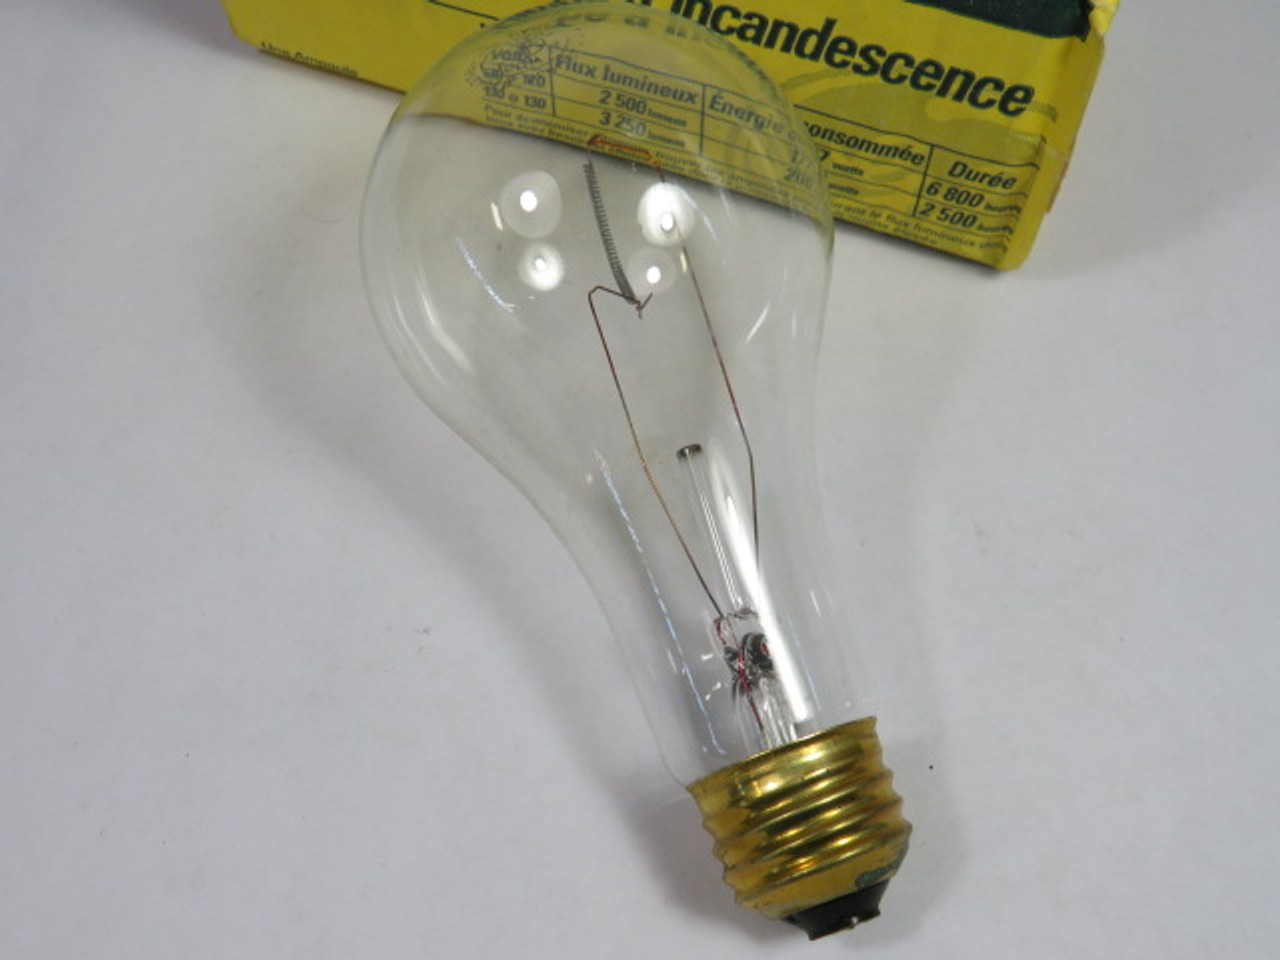 GE Lighting 25937 Incandescent Lamp 130 Volt ! NEW !